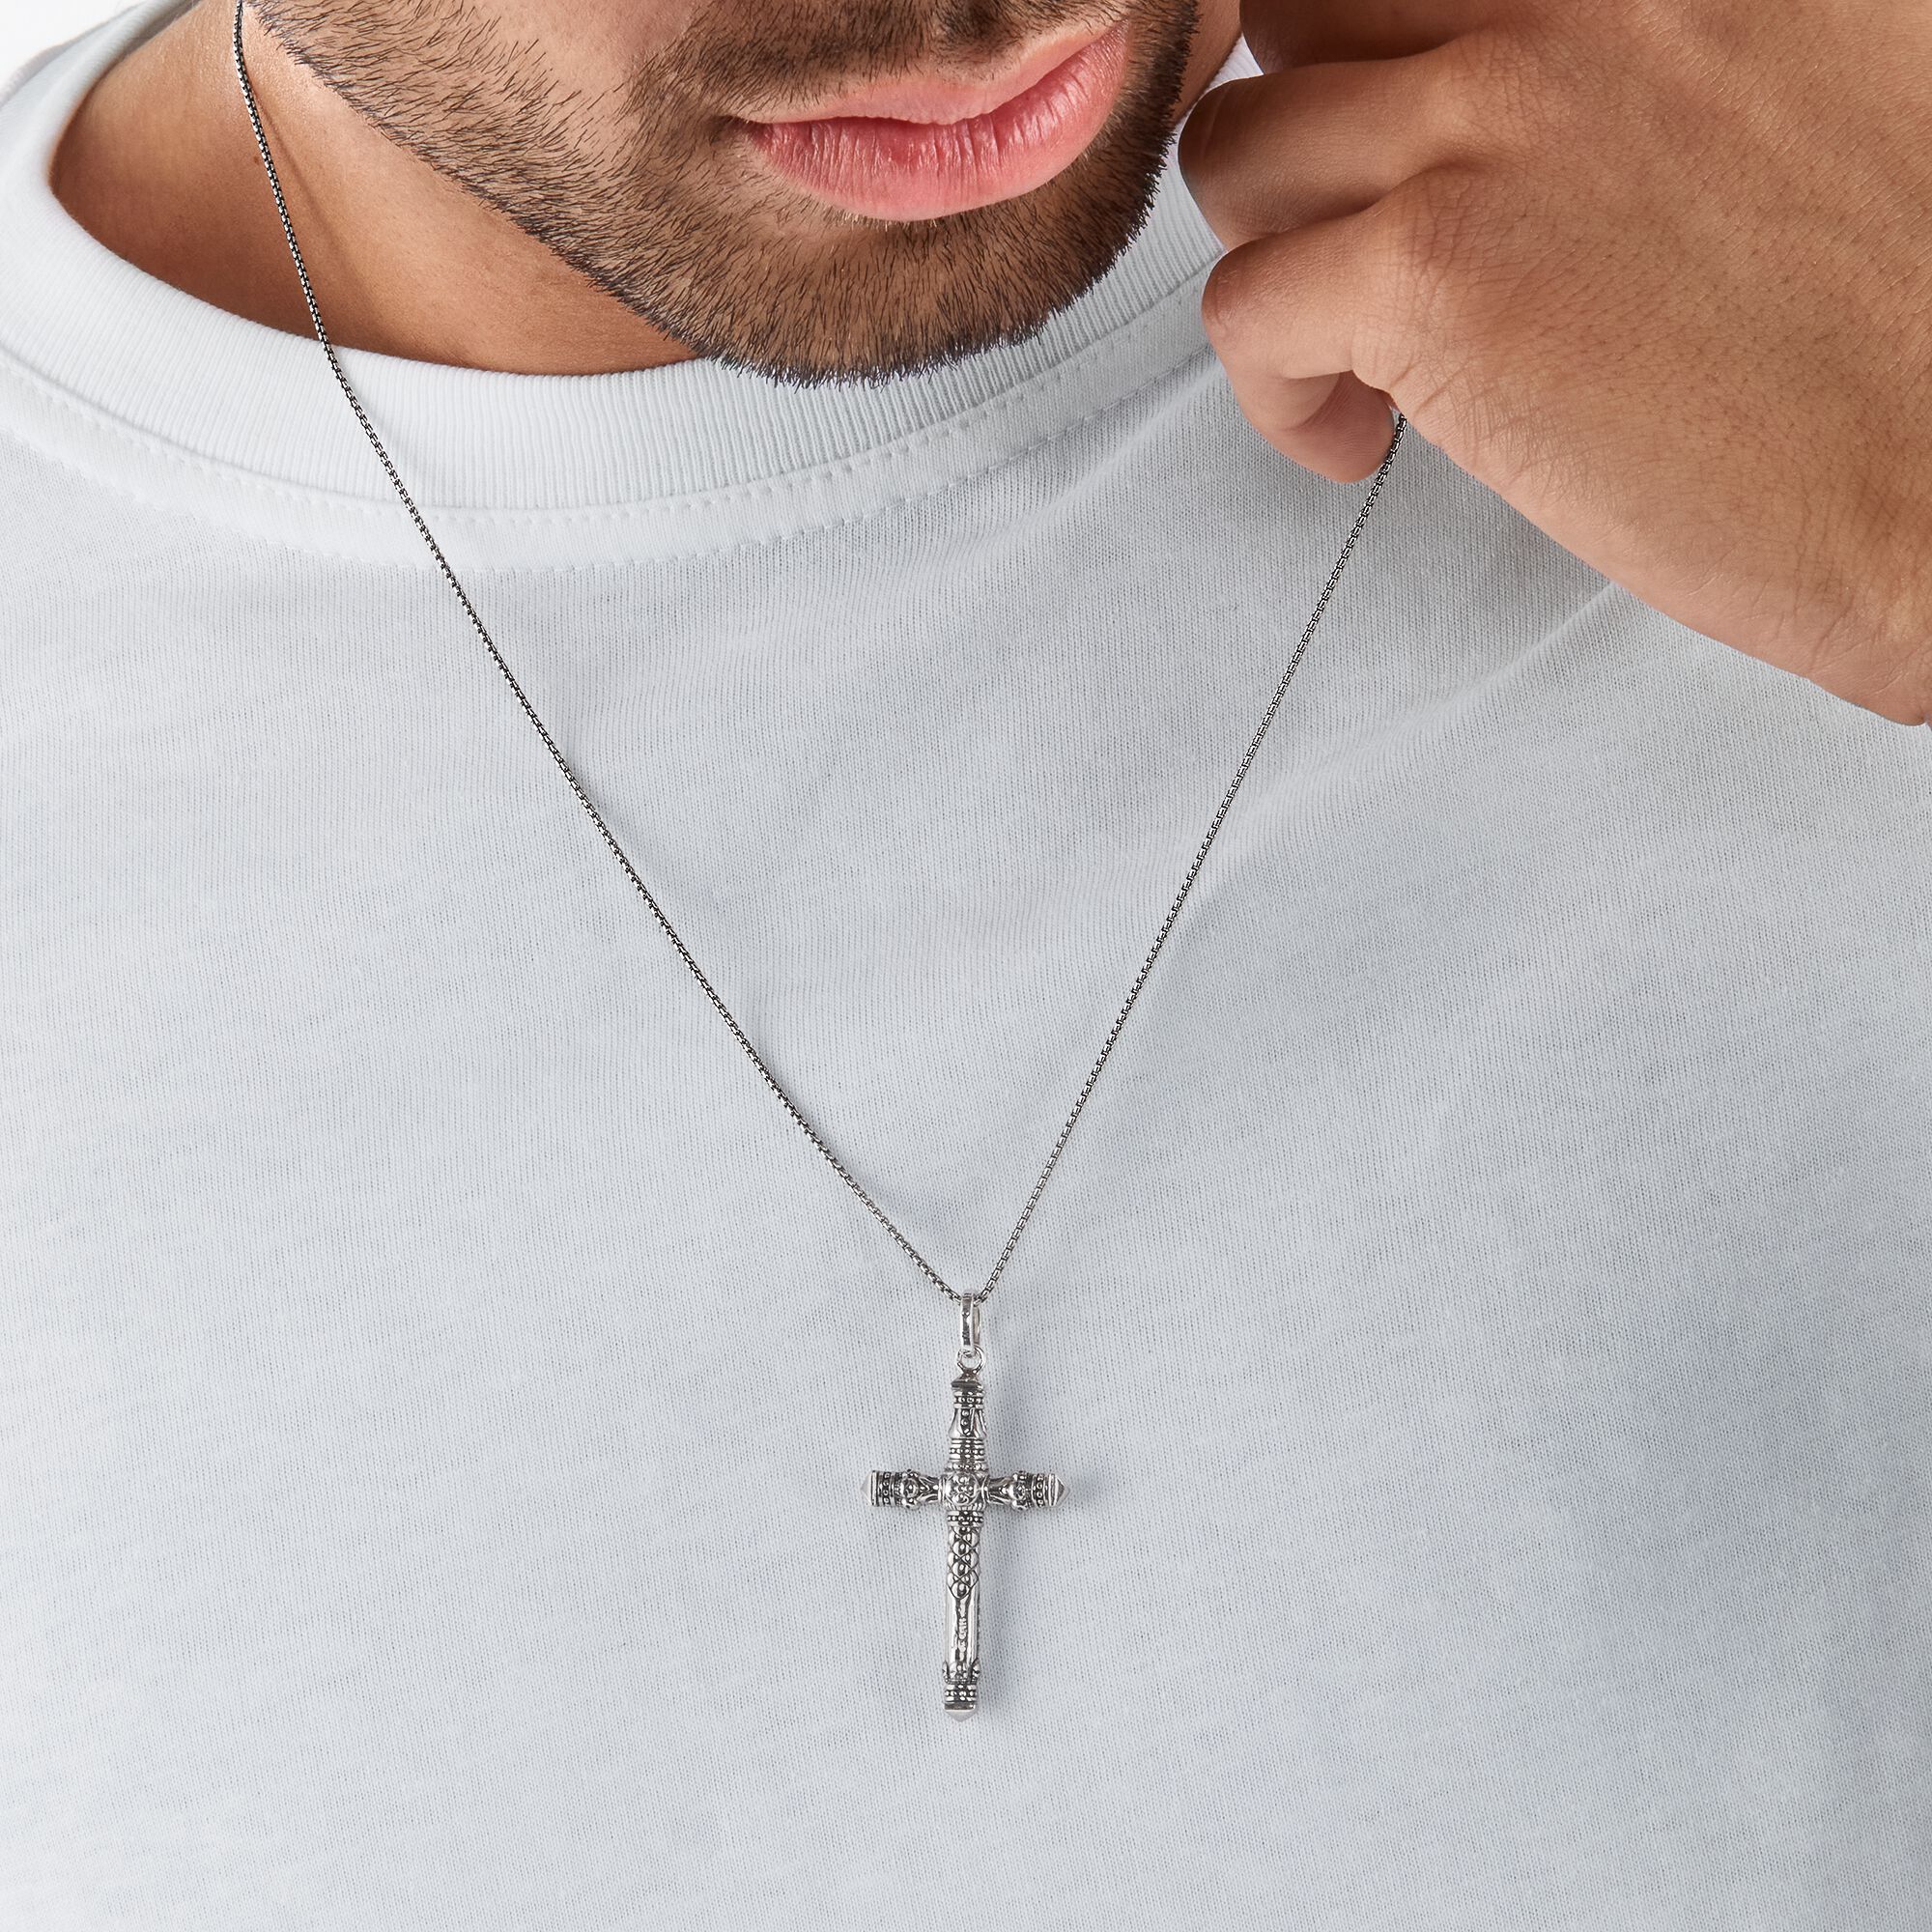 Cross pendant for men with symbols